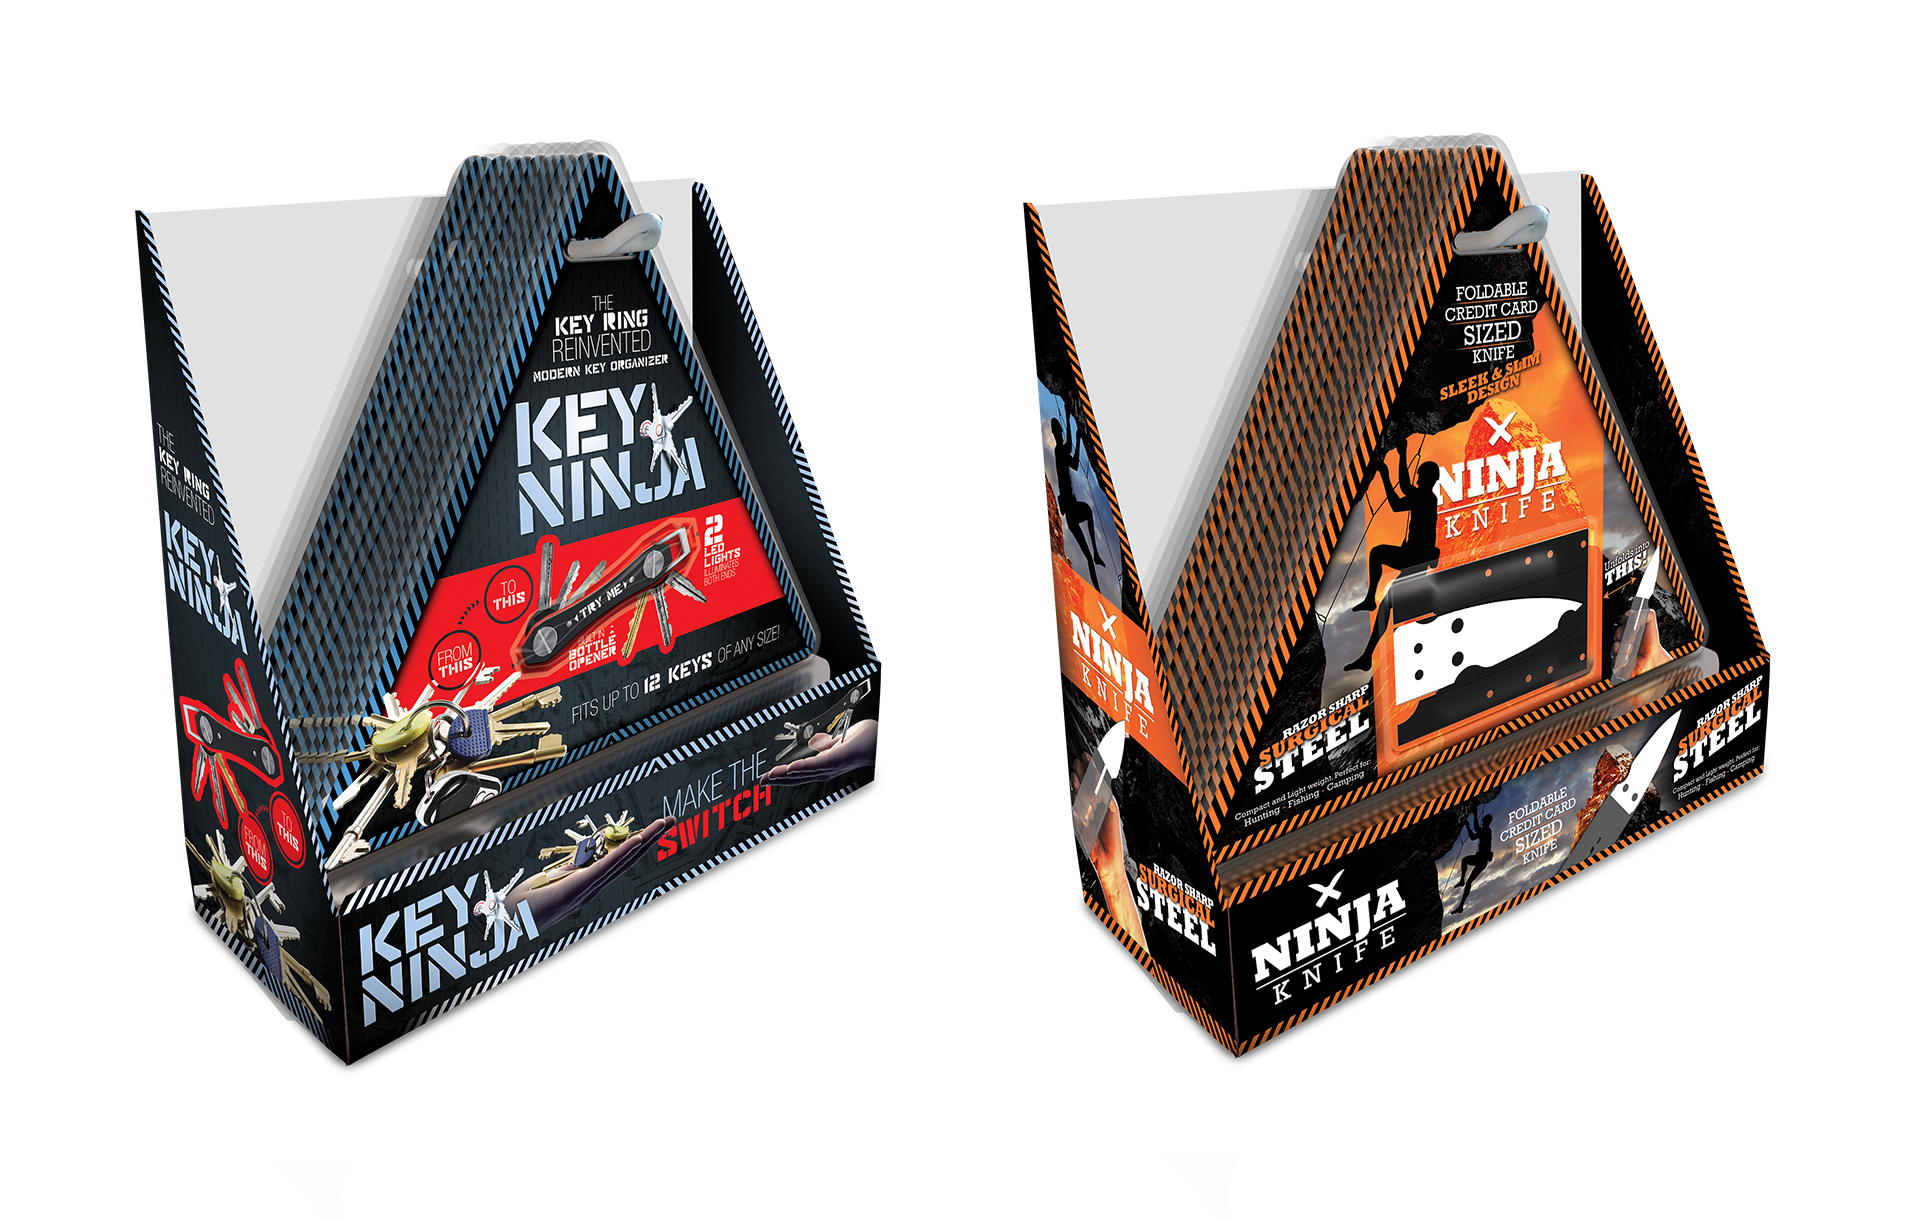 Wallet Ninja Key Ninja and Ninja Knife Product Packaging Design by Scott Luscombe of Creatibly